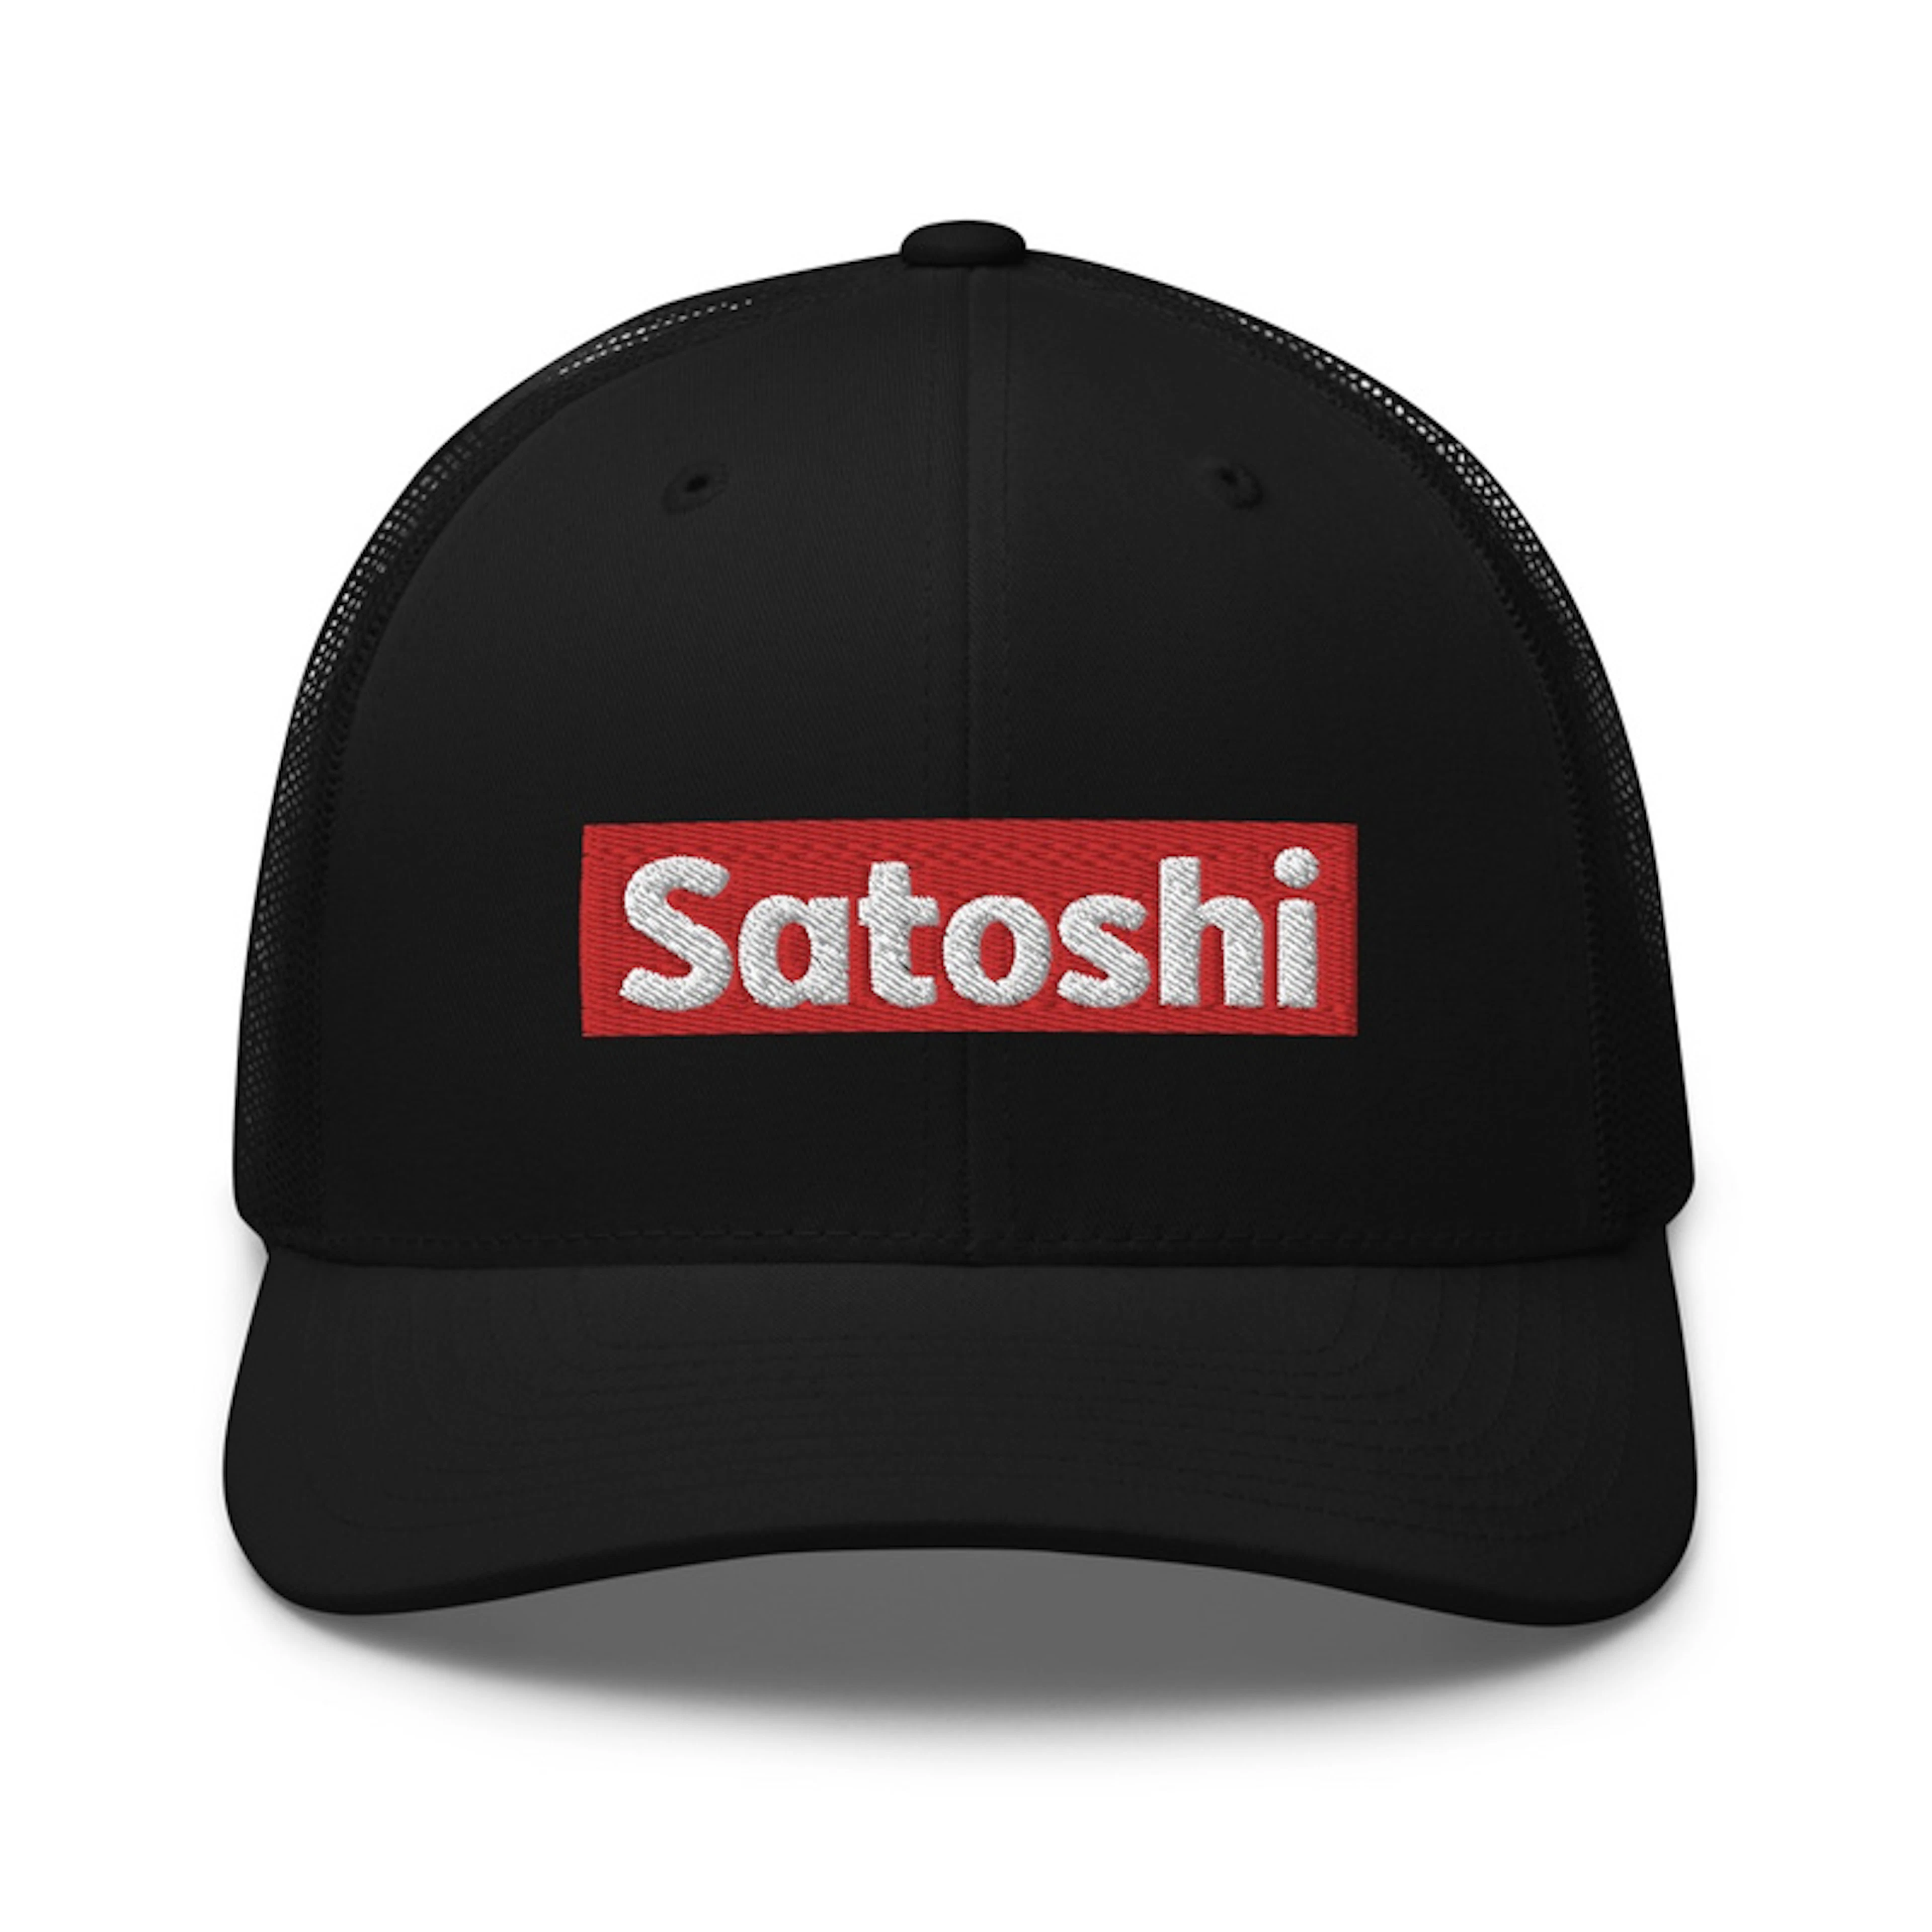 Bitcoin Satoshi Trucker Cap